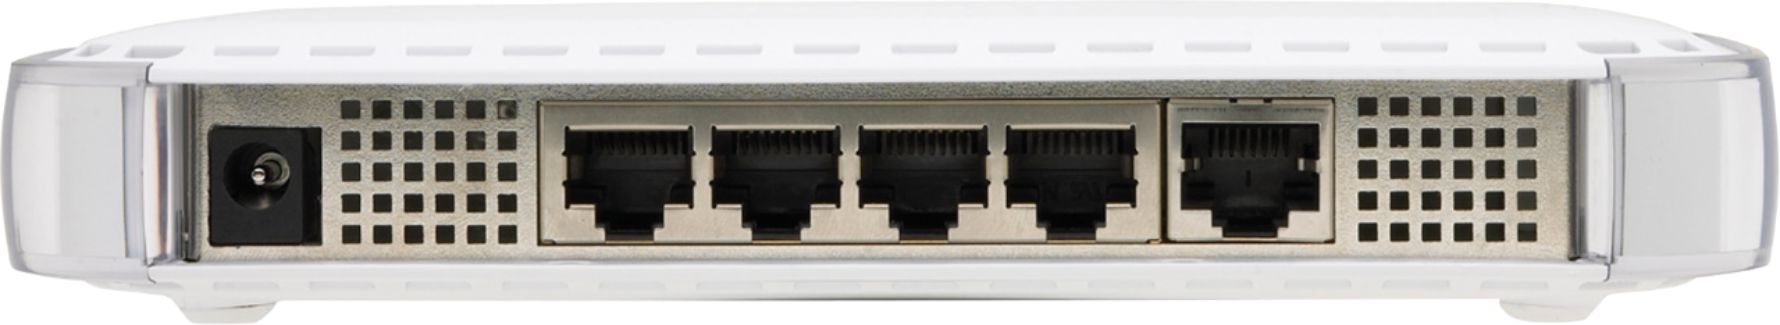 Netgear 5 Port 10 100 1000 Mbps Gigabit Unmanaged Switch White Gs605na Best Buy